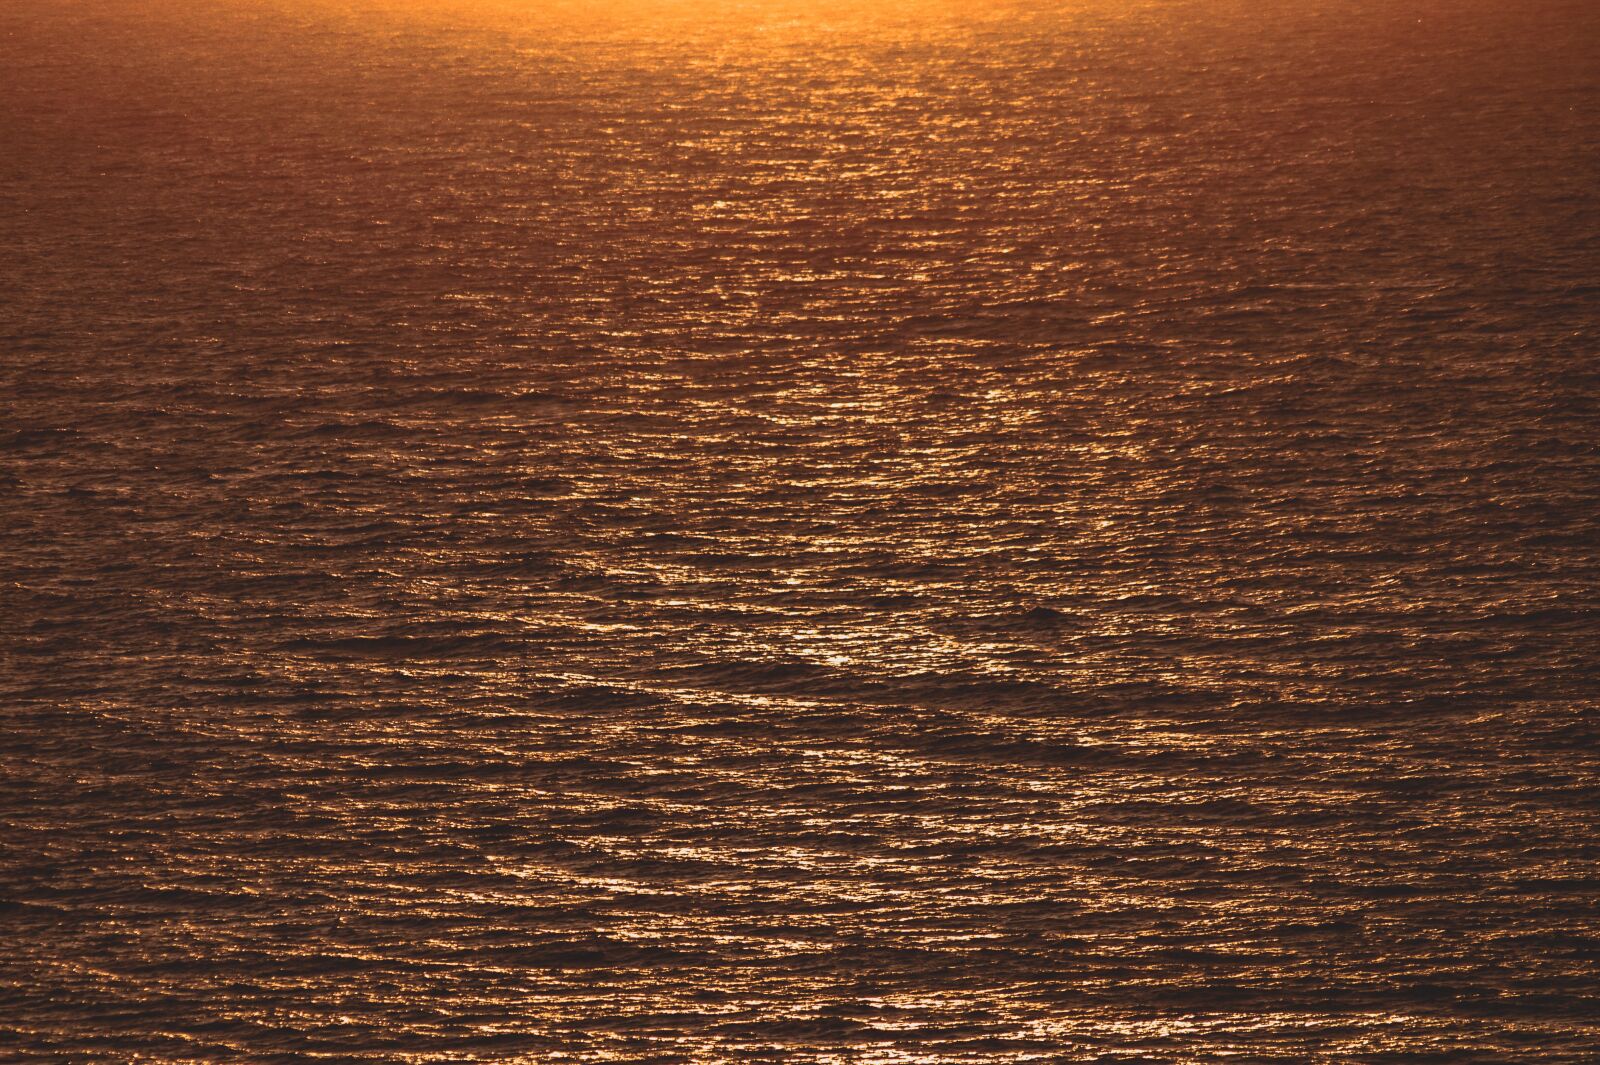 Sony DT 50mm F1.8 SAM sample photo. Sea, sunset, heaven photography